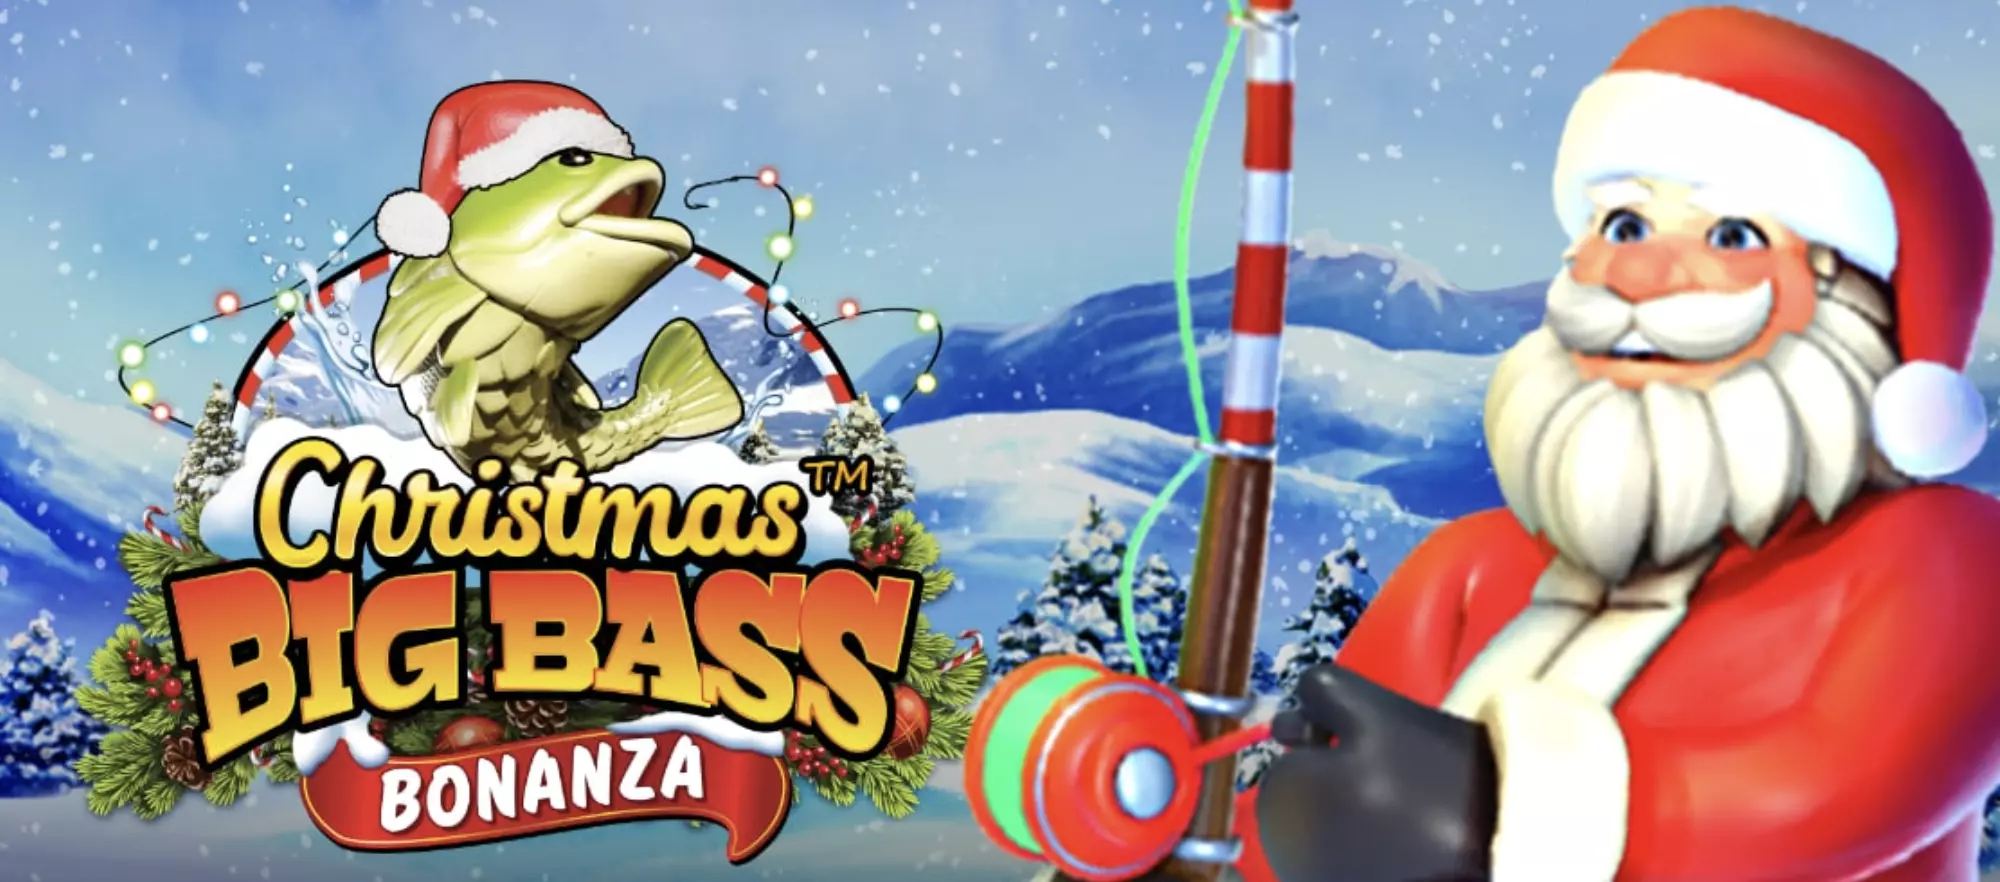 Slot Bonanza Bass Besar Natal